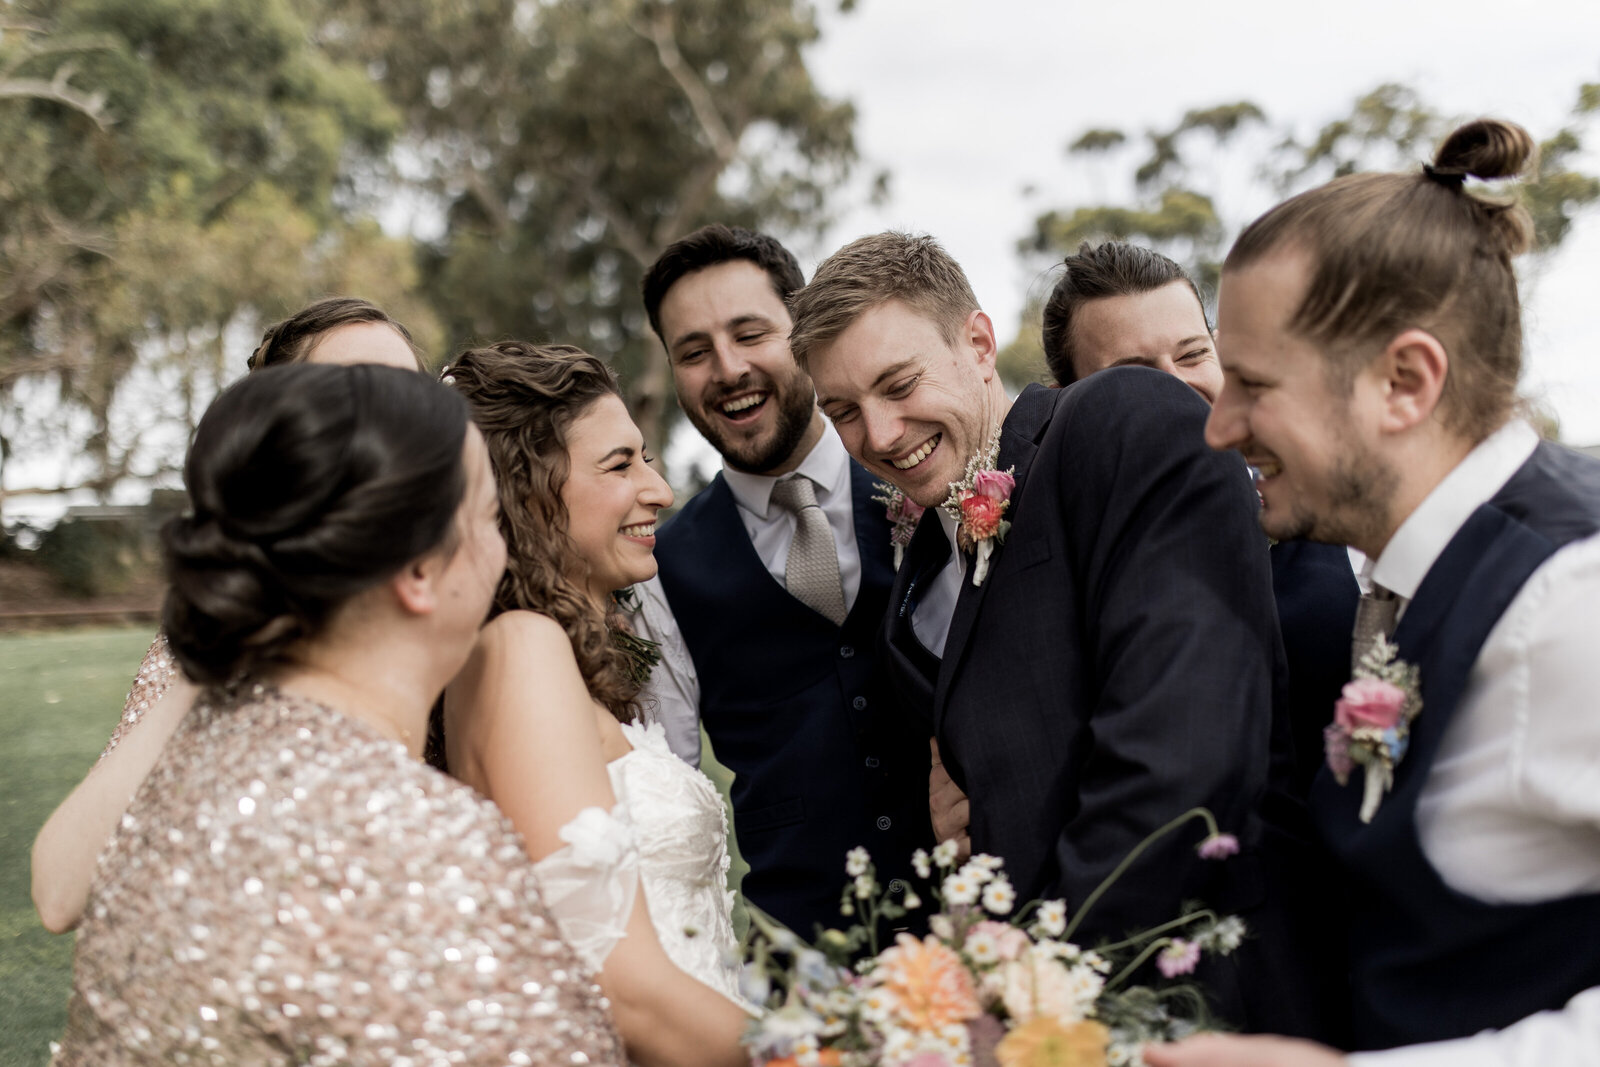 Emily-Ben-Rexvil-Photography-Adelaide-Wedding-Photographer-422